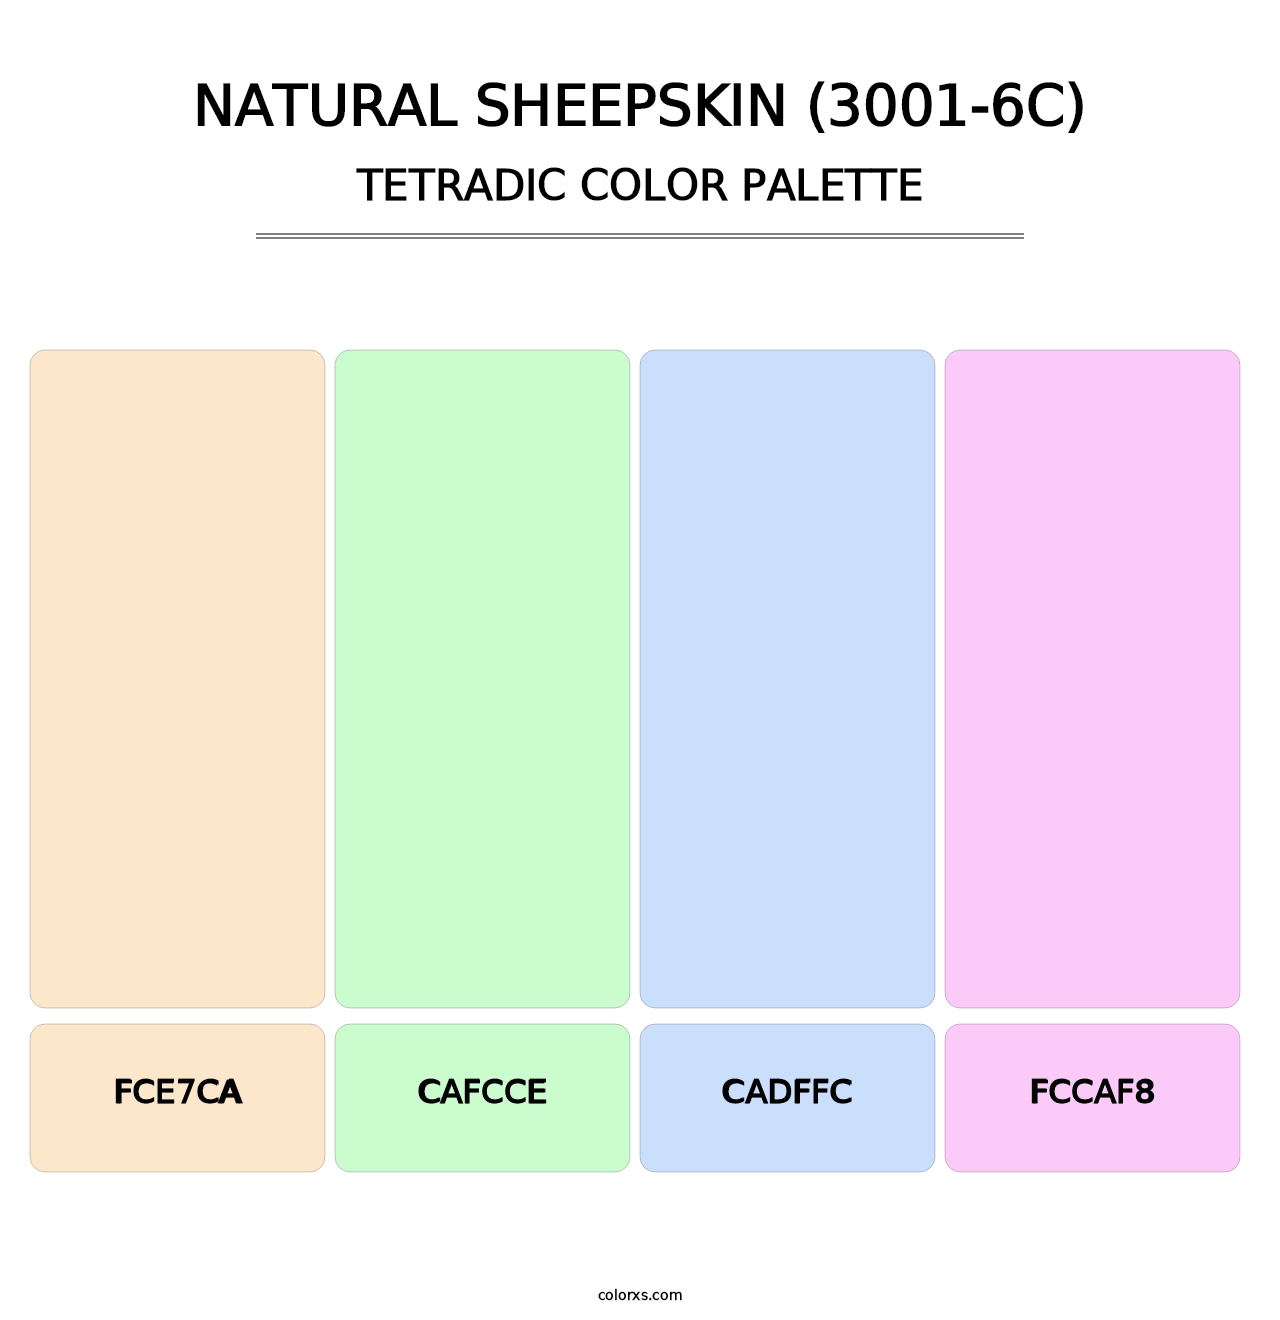 Natural Sheepskin (3001-6C) - Tetradic Color Palette